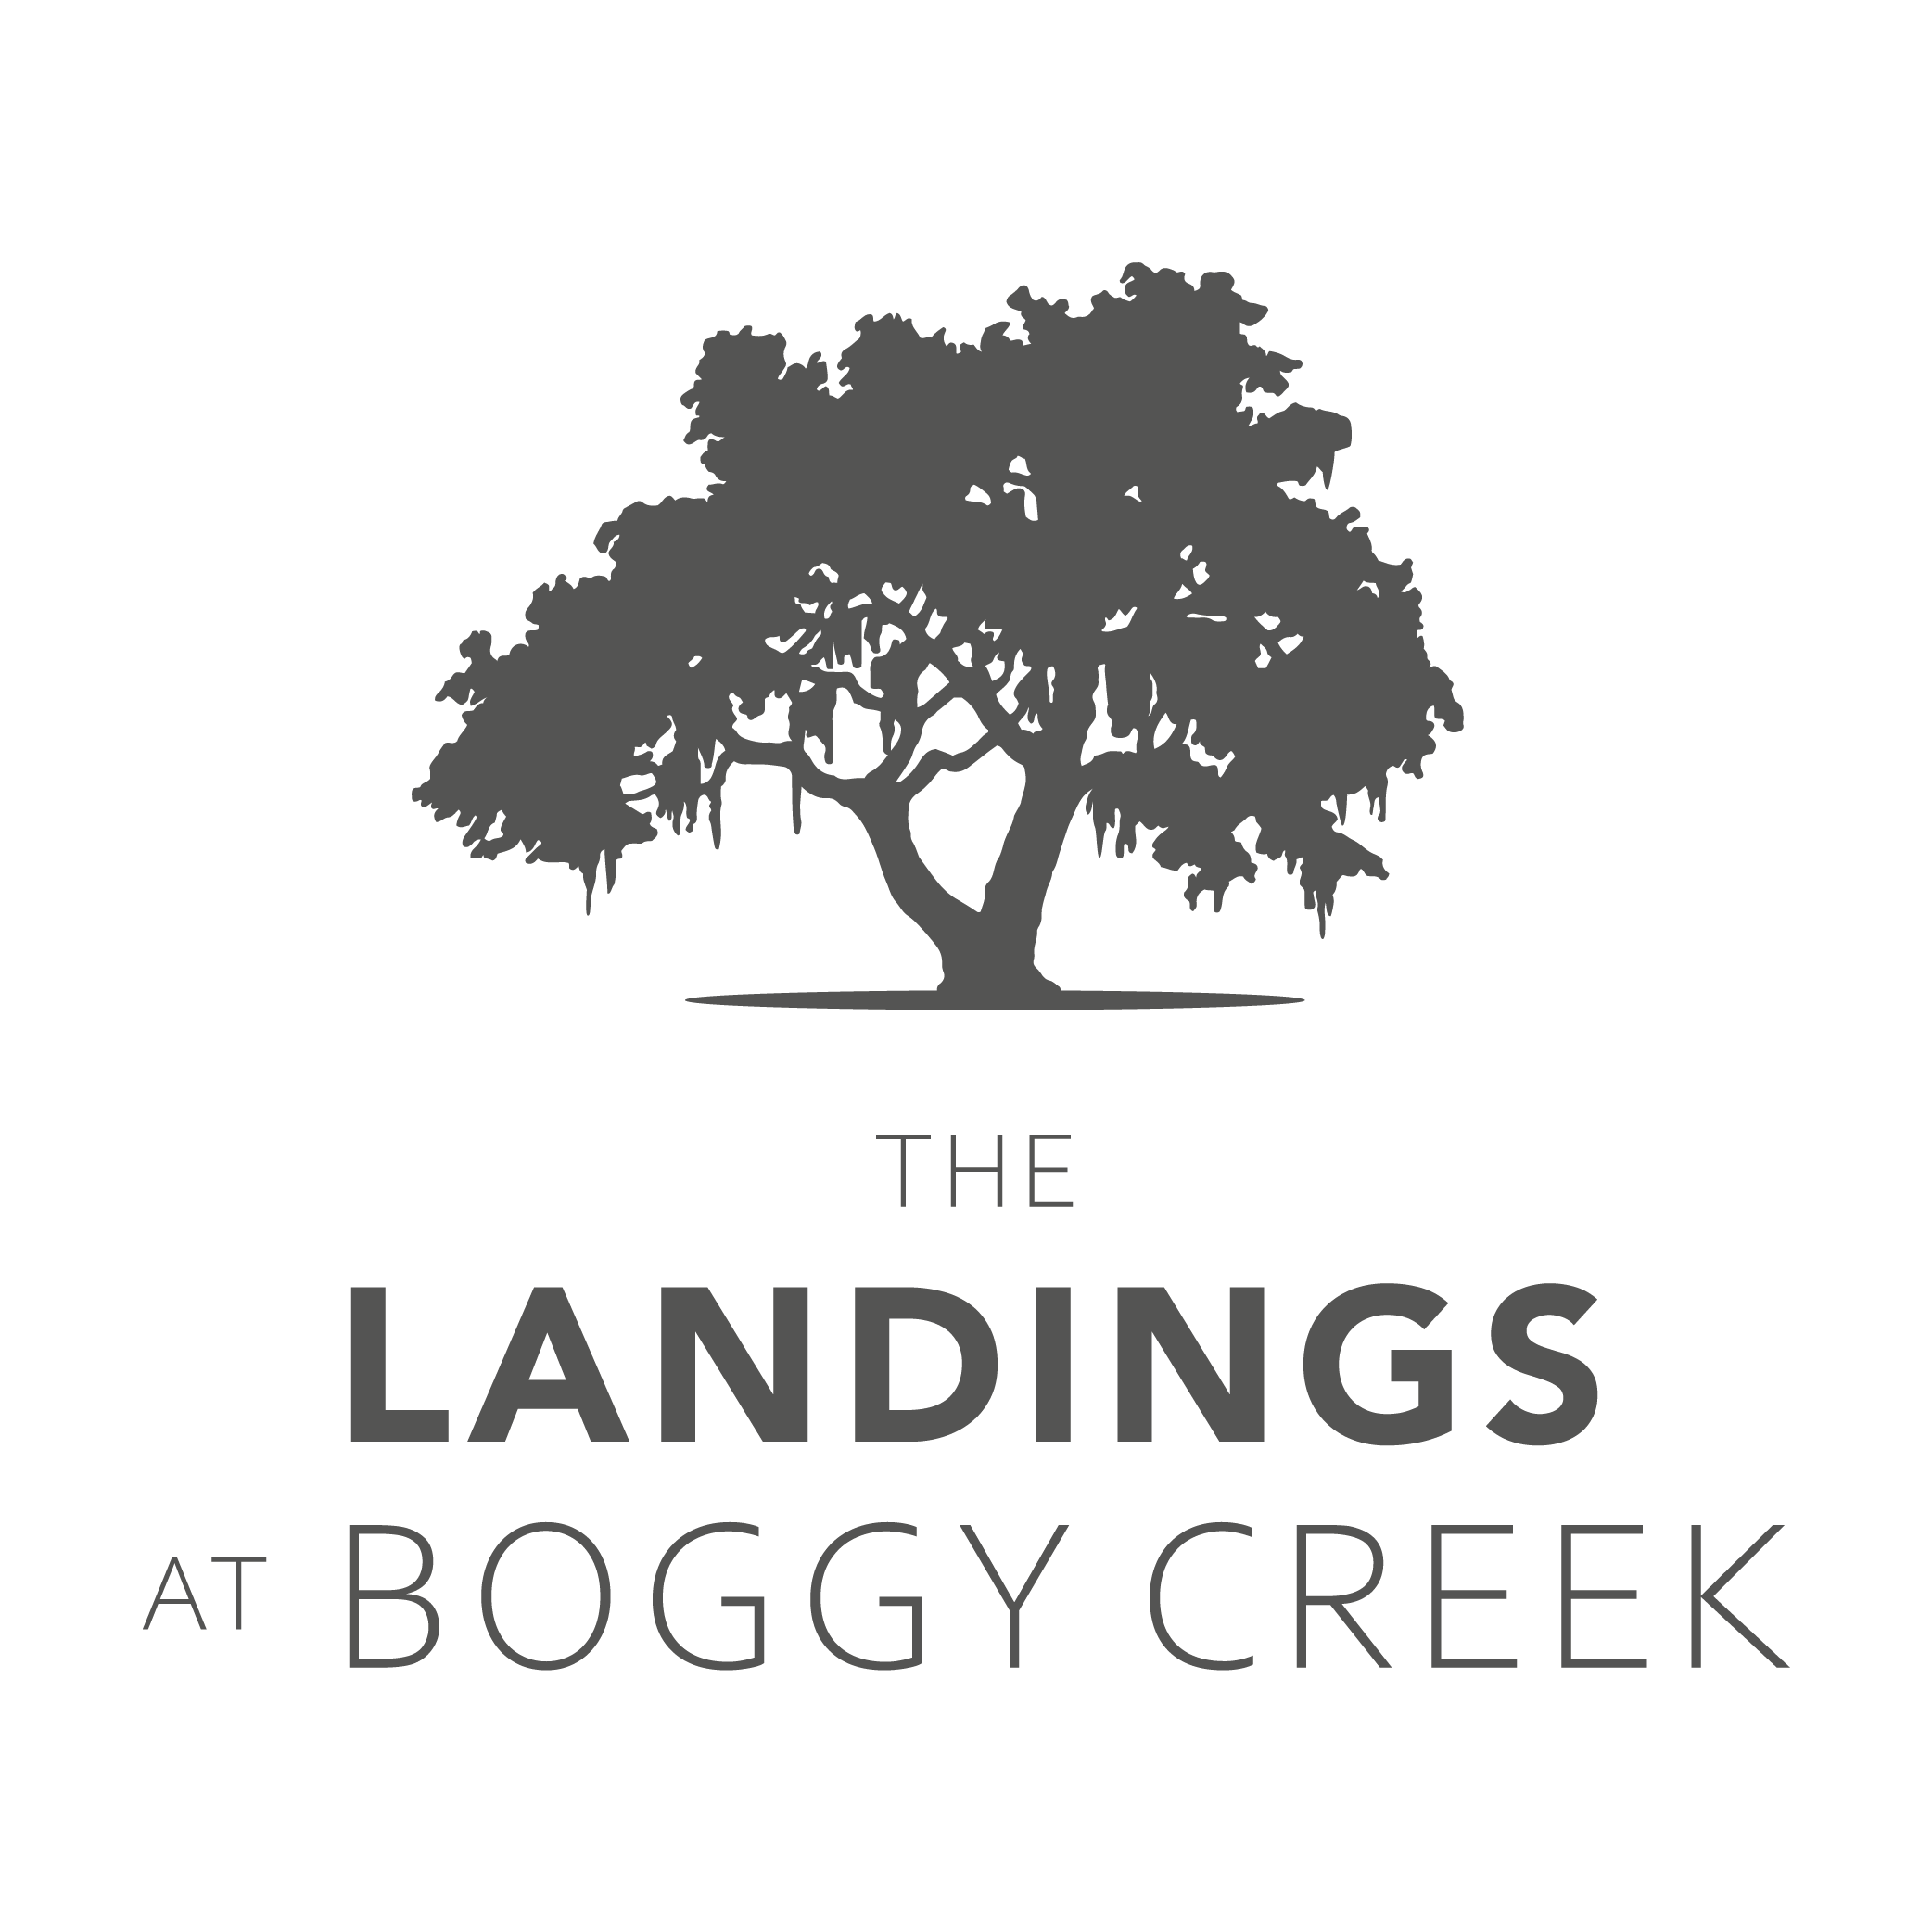 The Landings at Boggy Creek